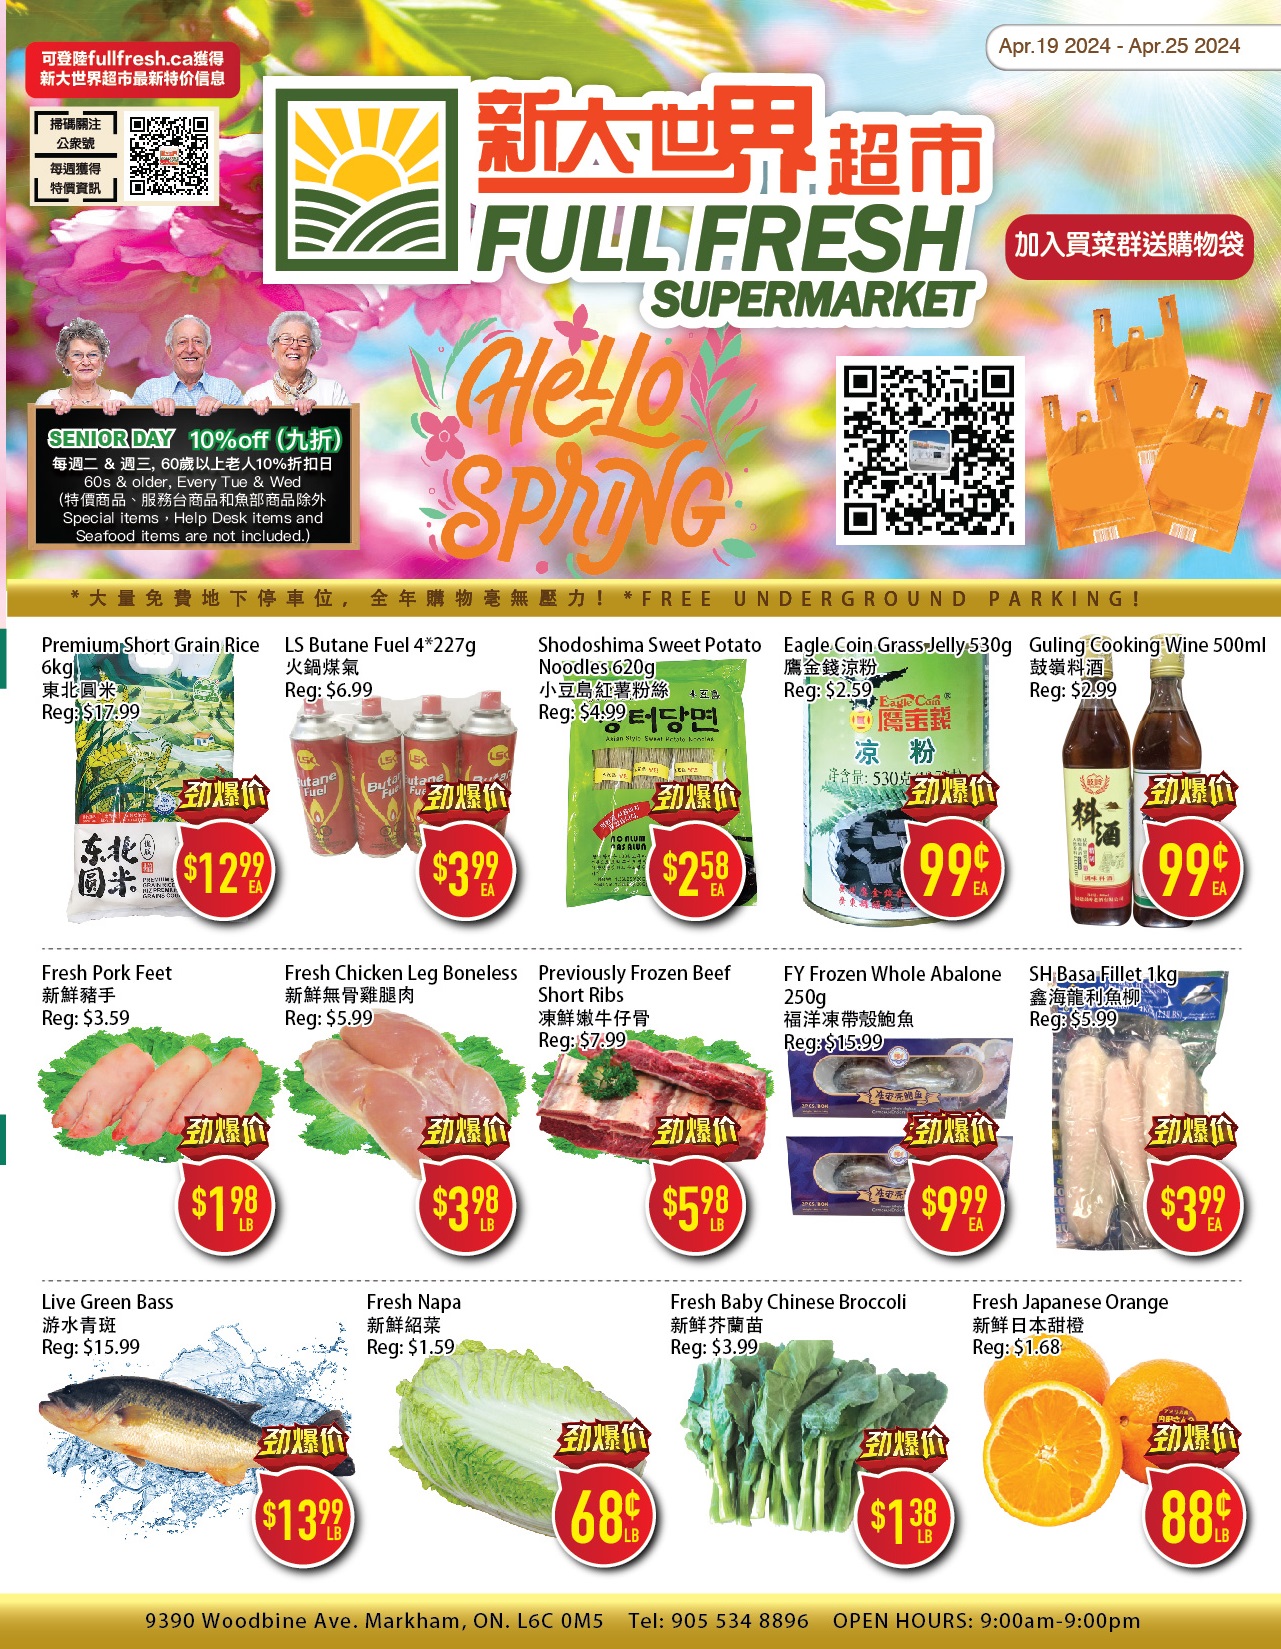 Full Fresh Supermarket - Weekly Flyer Specials